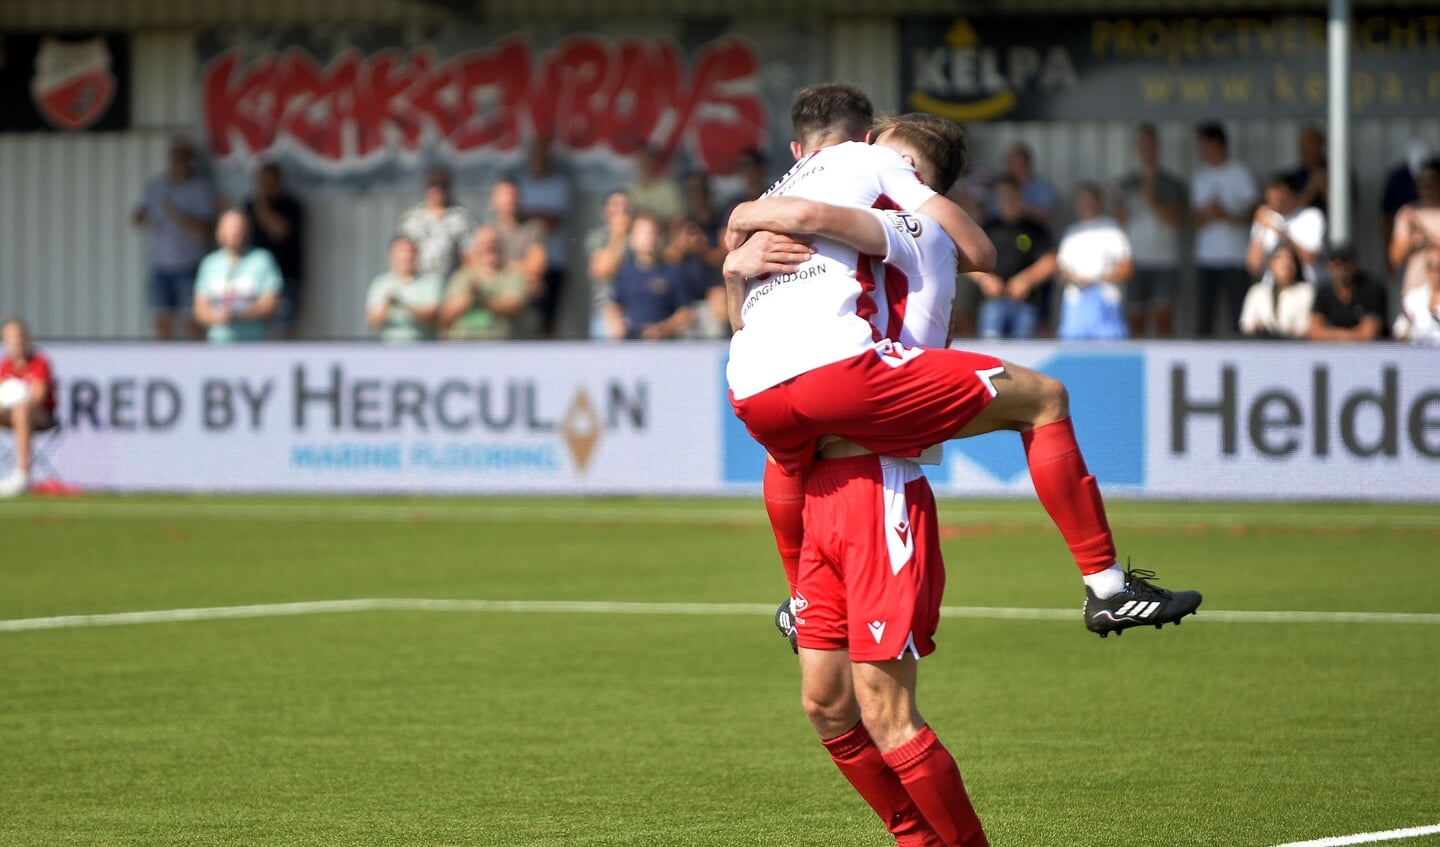 • Kozakken Boys - Excelsior Maassluis (3-0).